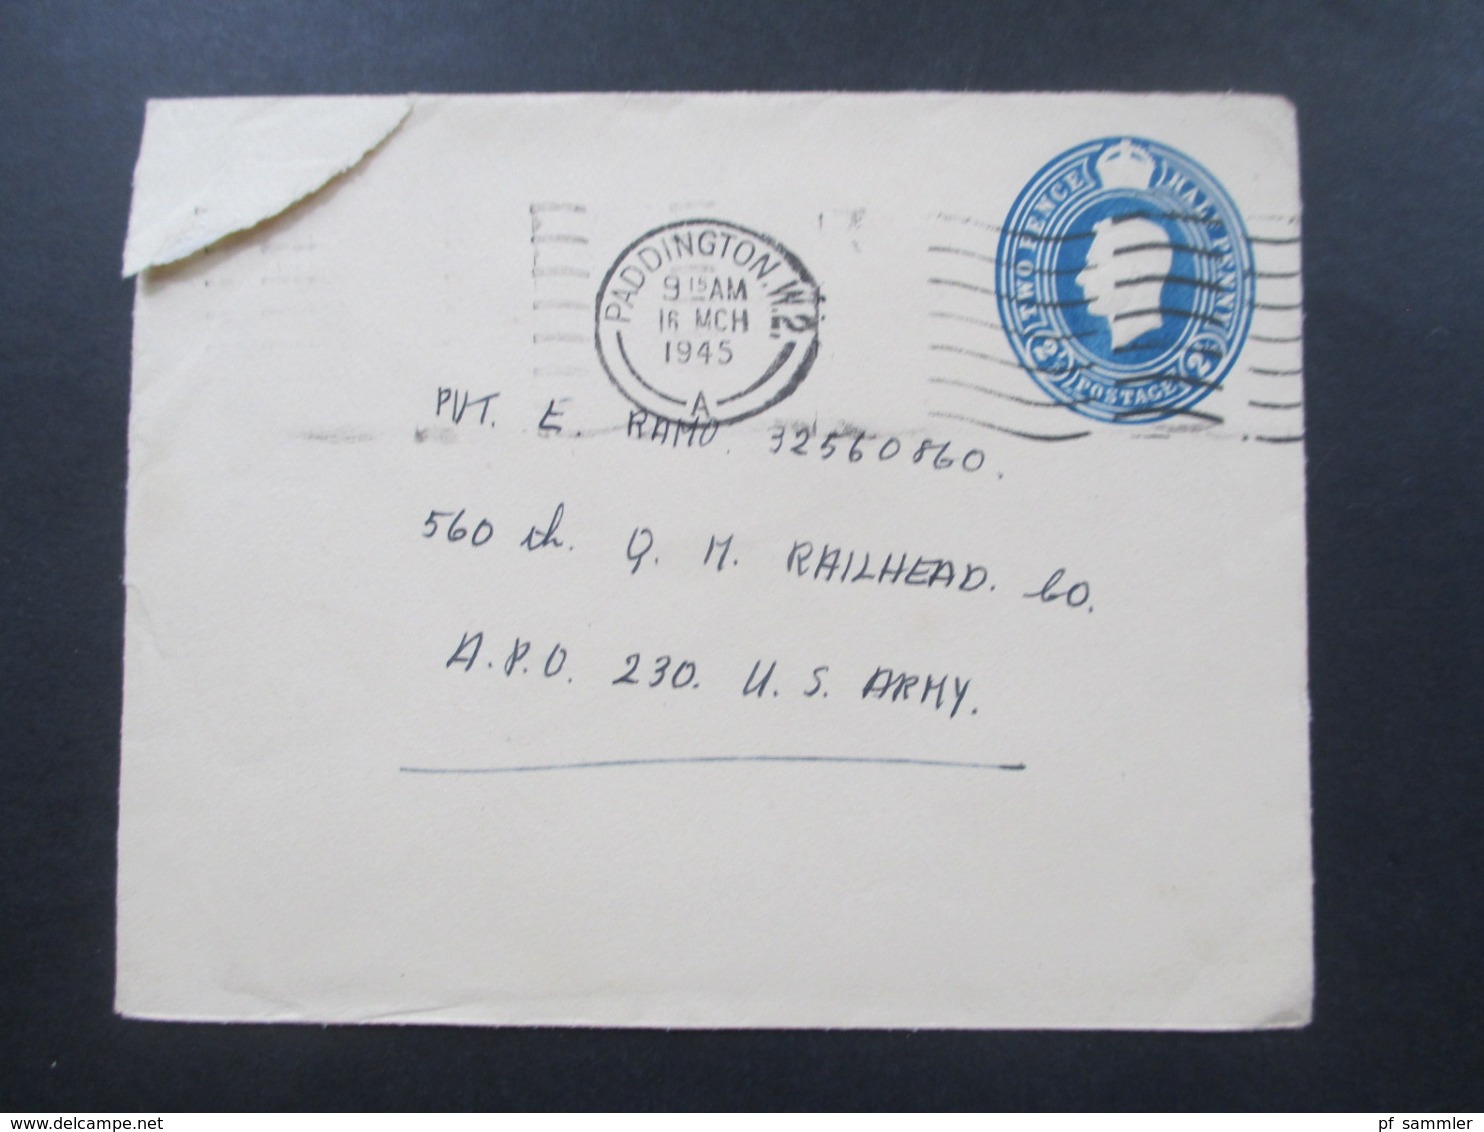 GB 16.3.1945 Die Letzten Kriegstage! GA Umschlag Paddington An Die US Army APO 230 Stempel US Army Postal Service - Cartas & Documentos